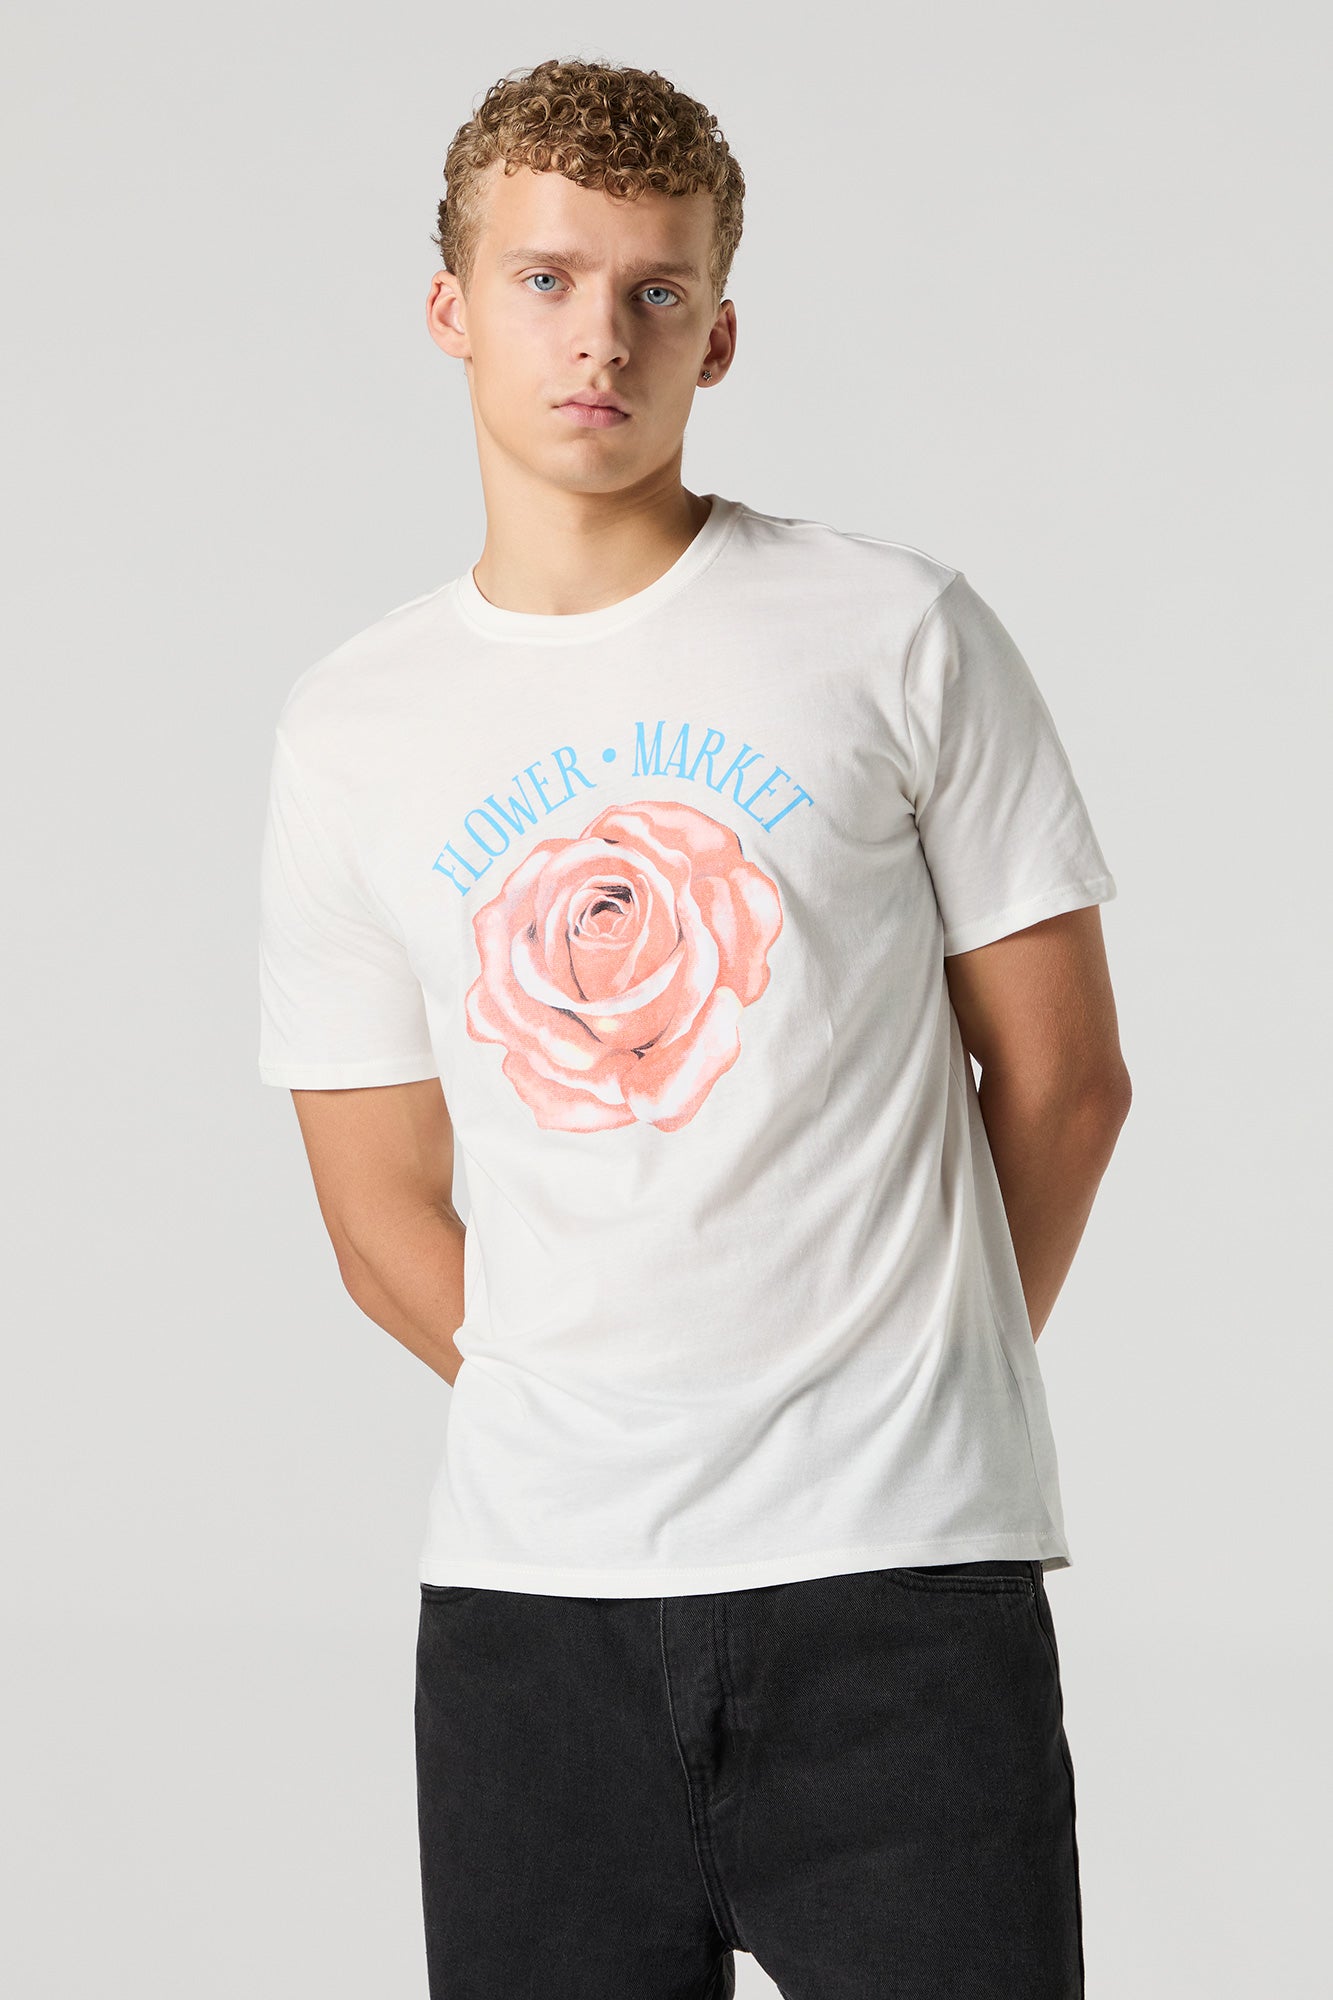 Flower Market Graphic T-Shirt